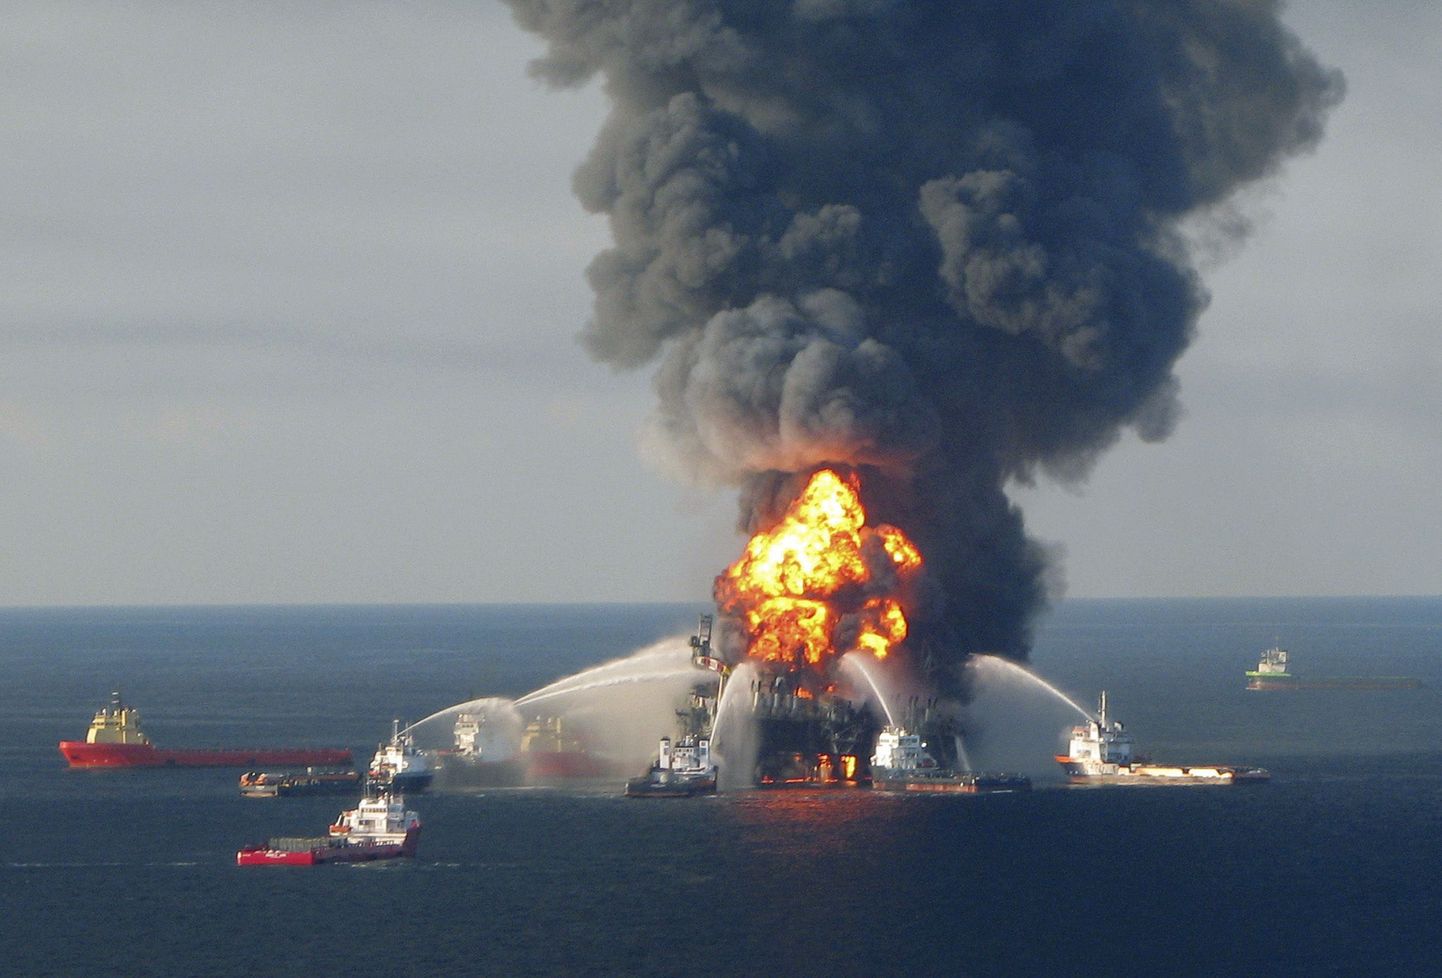 Deepwater Horizoni naftakatastroof.